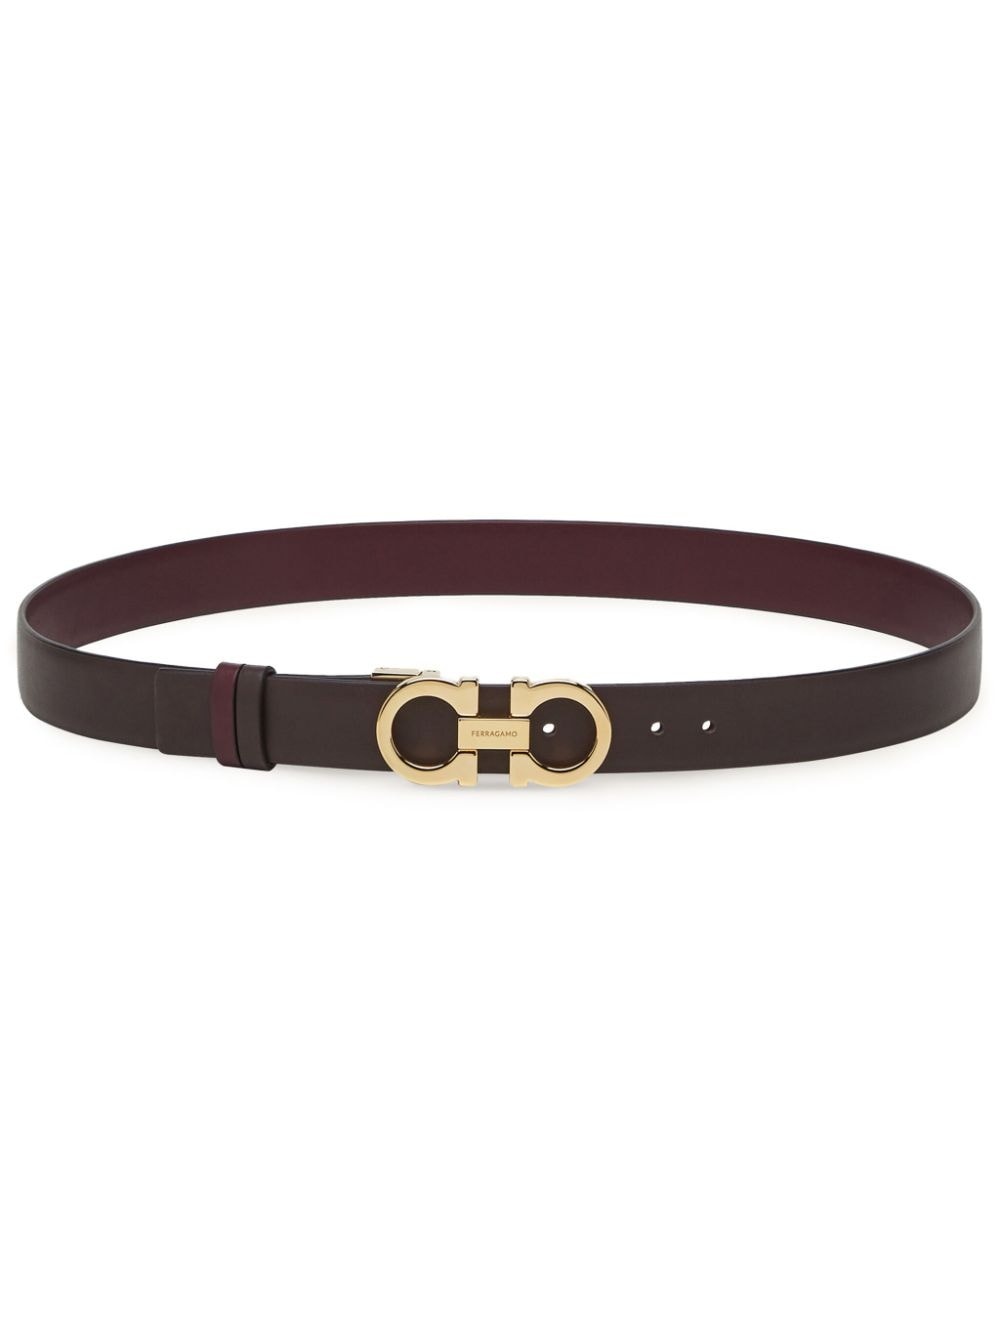 Gancini-buckle leather belt - 1